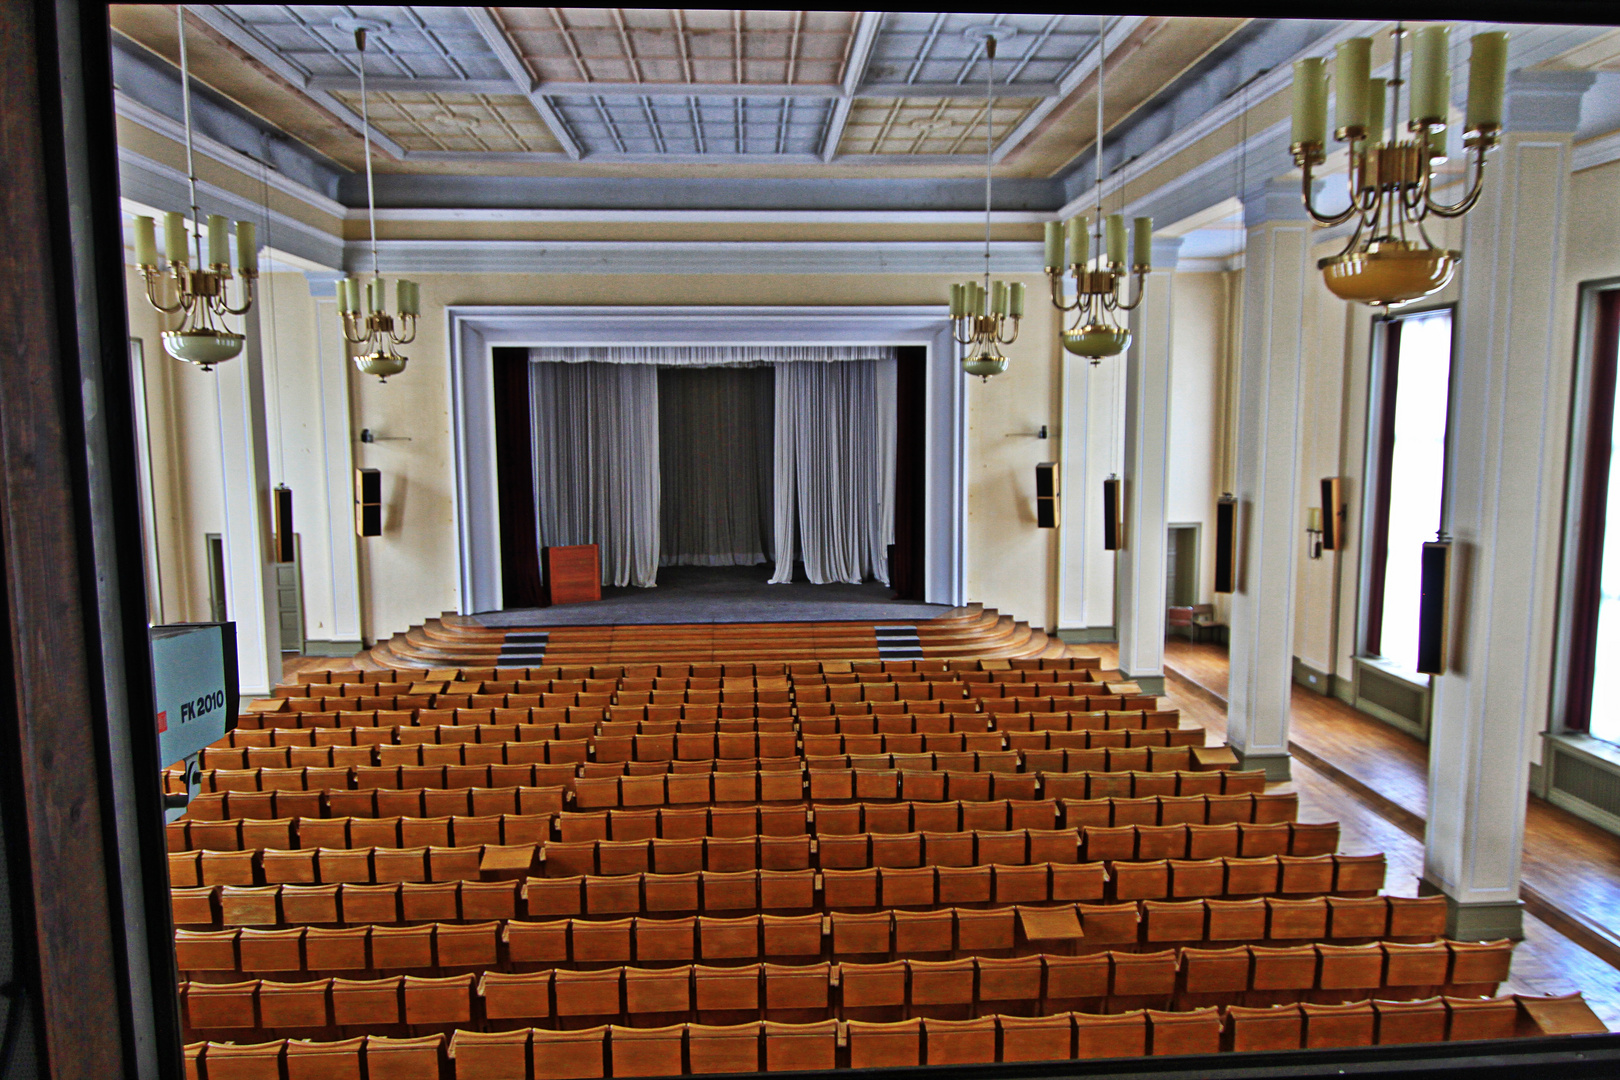 Plenarsaal